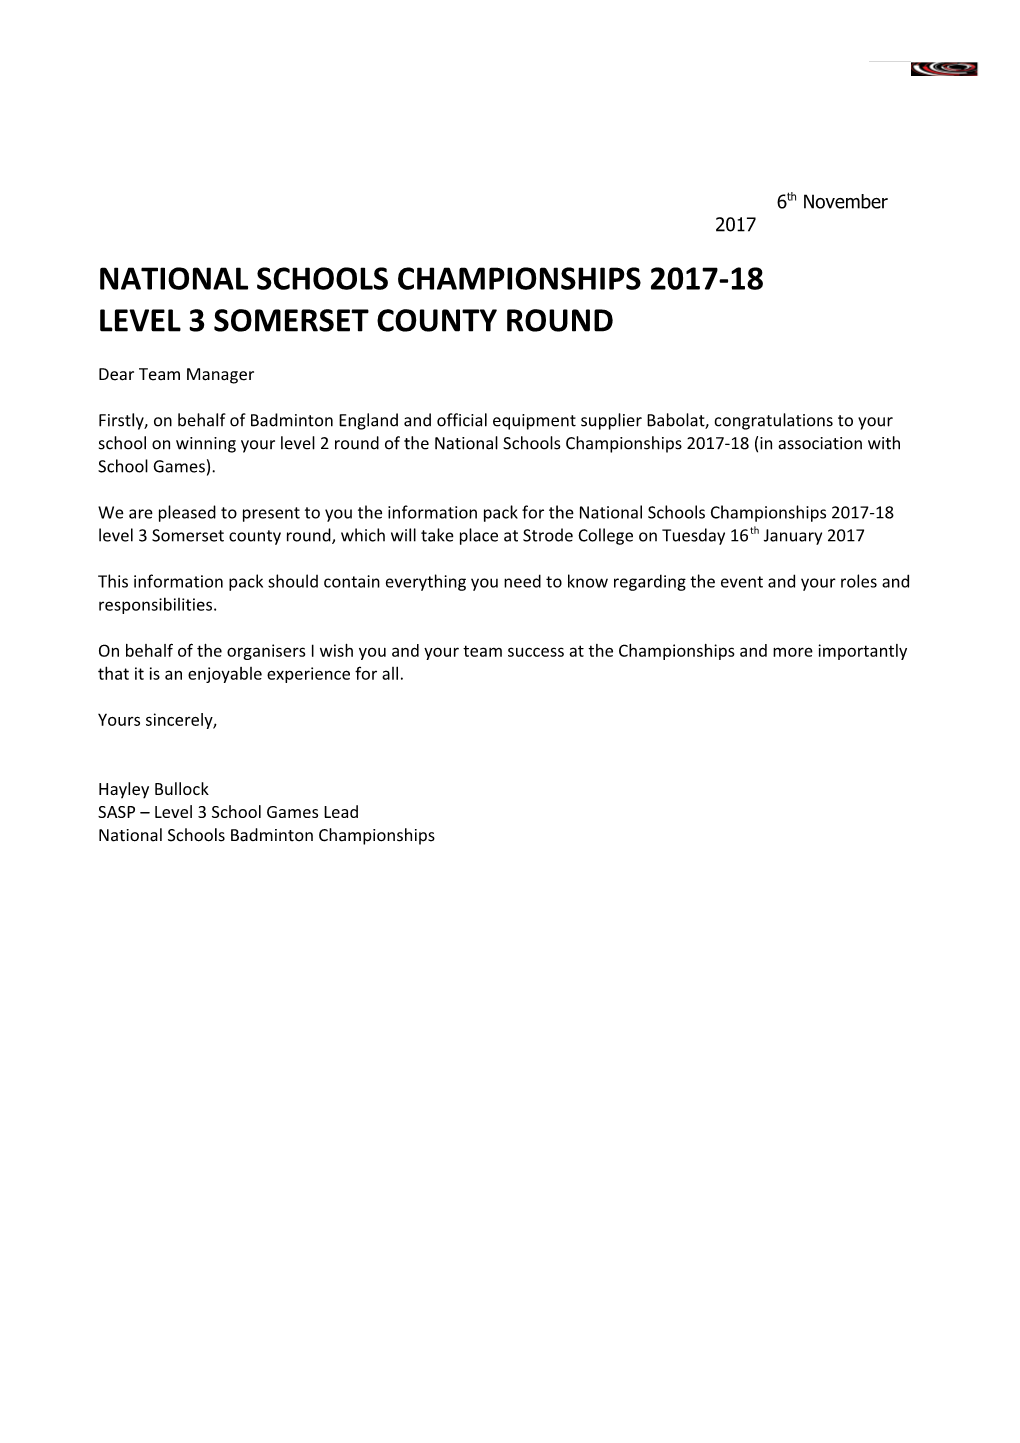 National Schools Championships 2017-18 Level 3 Somersetcounty Round